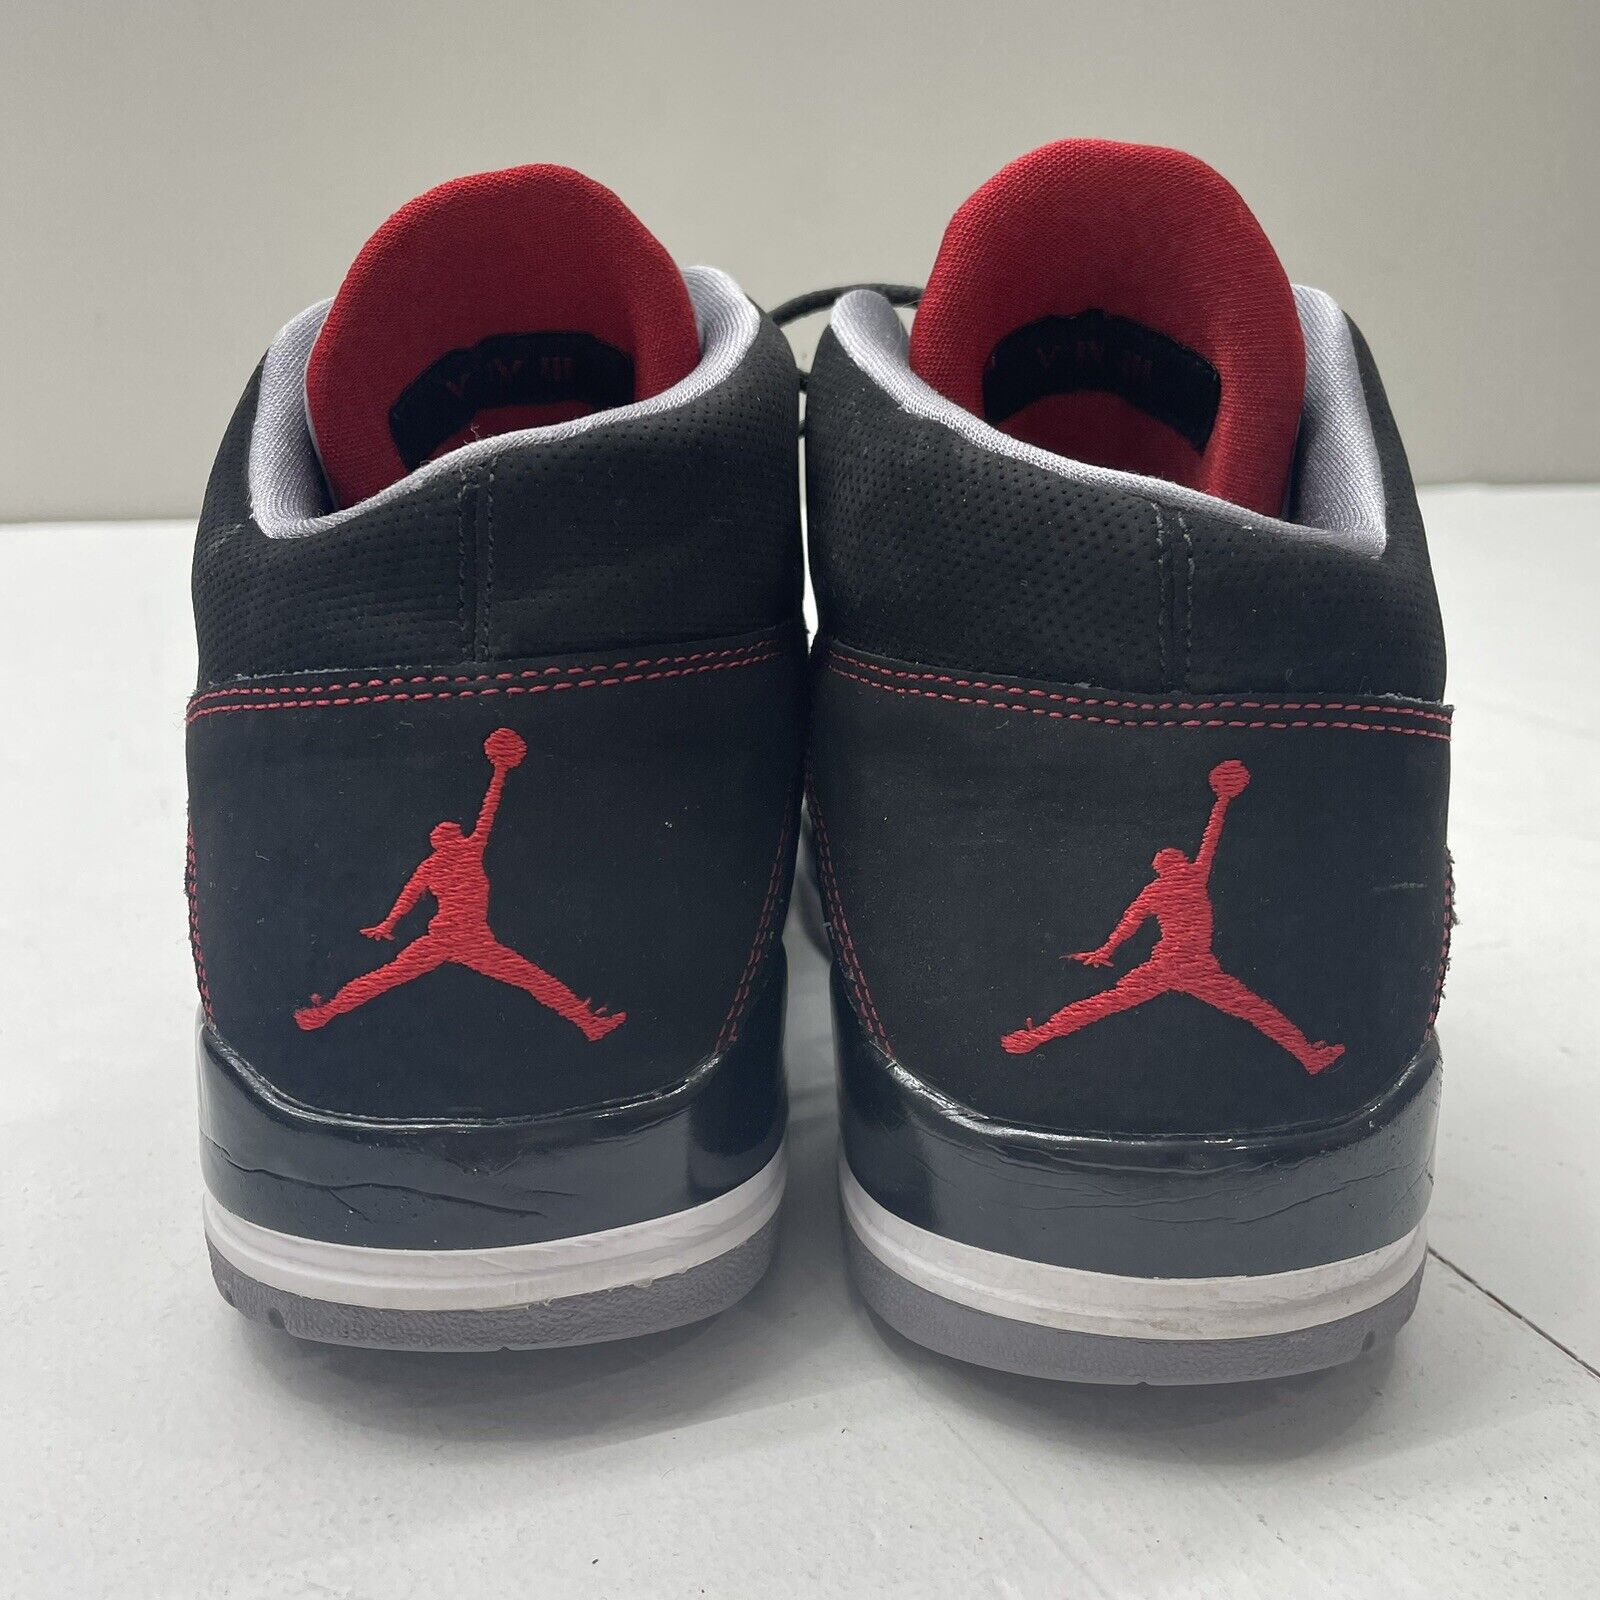 Nike Air Jordan Retro V IV III 543 Sneakers Grey Black 602661-003